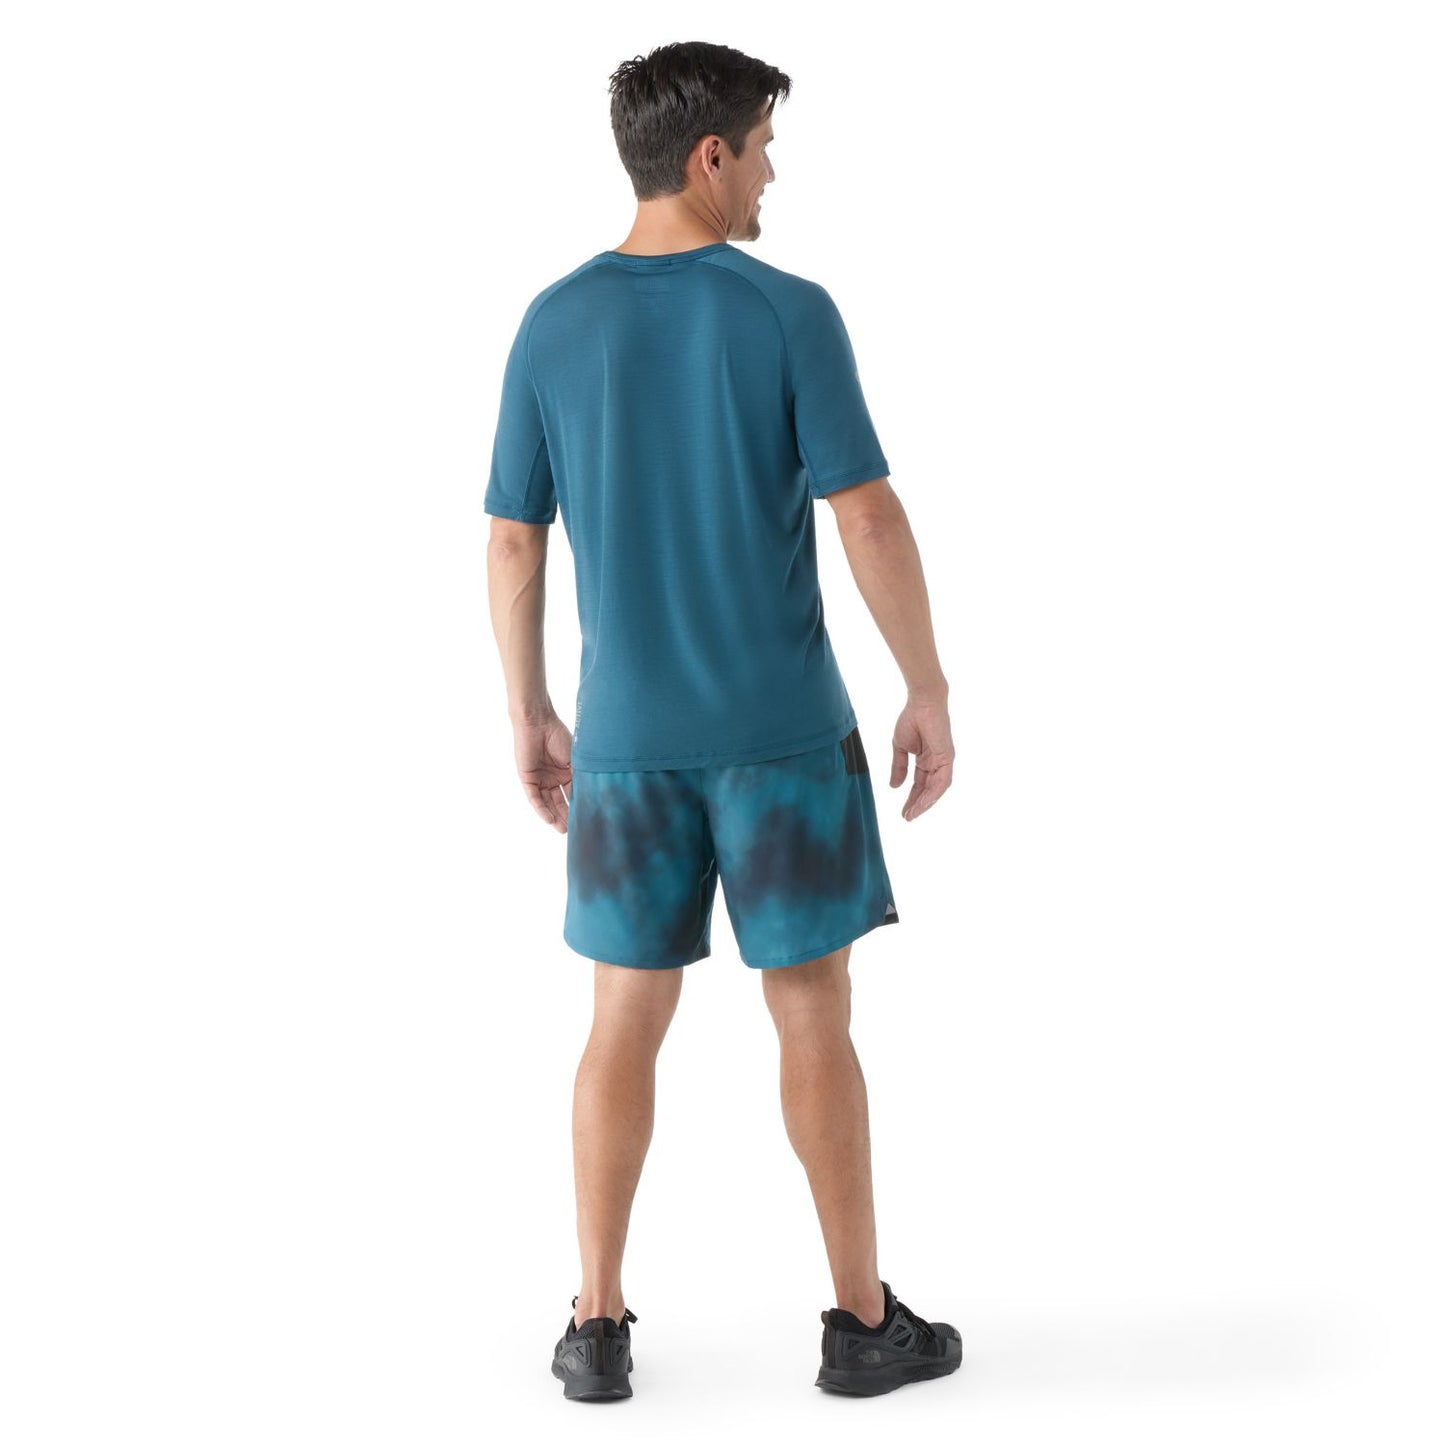 Men's Active Ultralite Short Sleeve - Twilight Blue